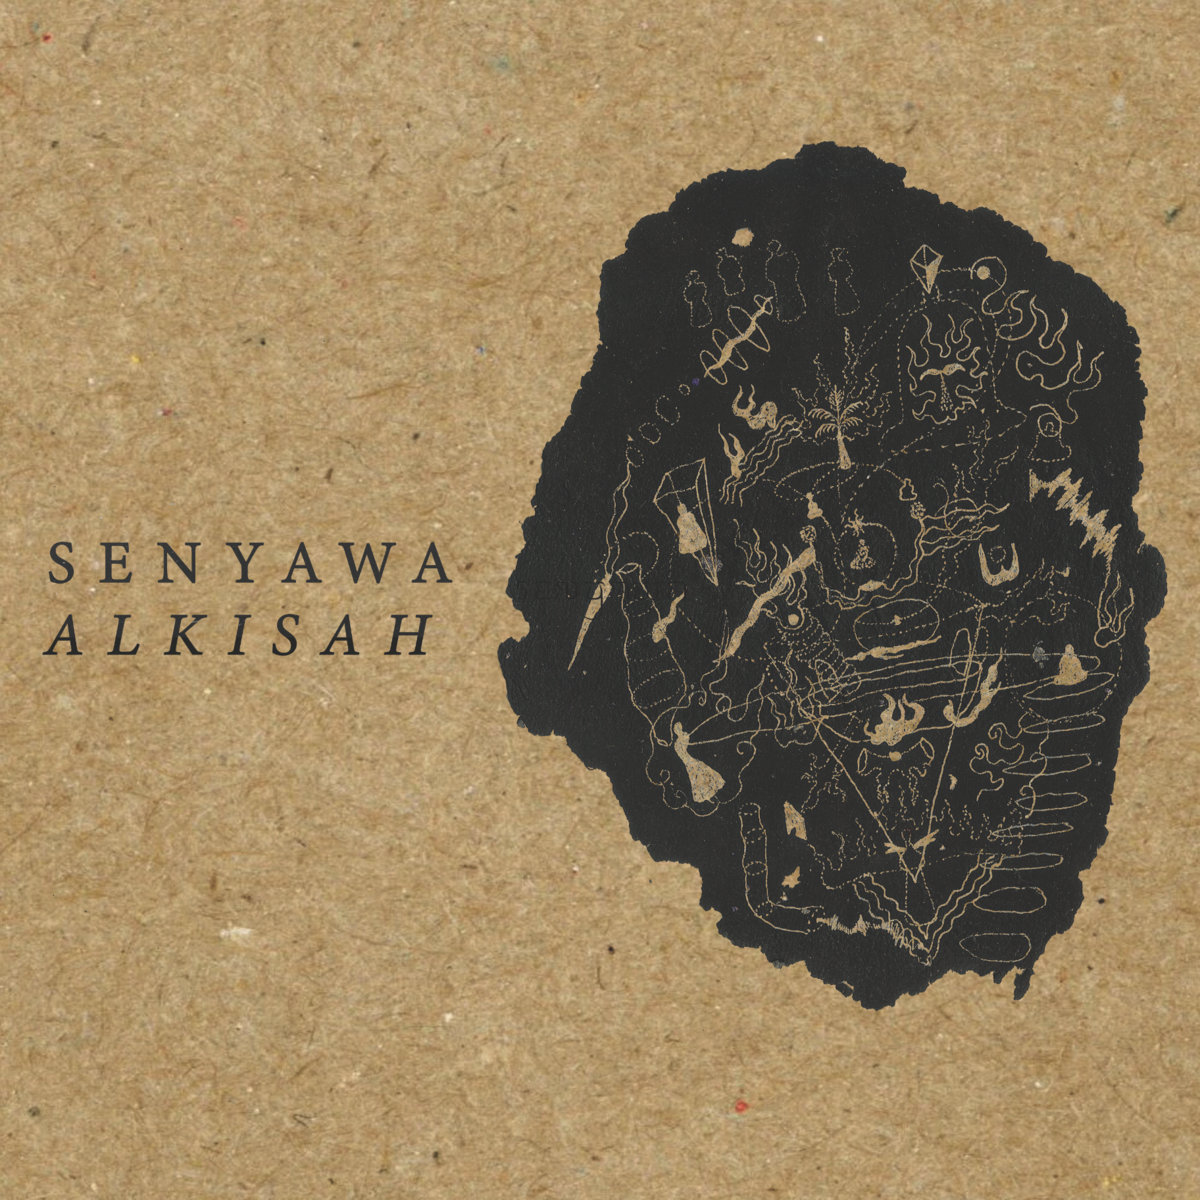 Senyawa - Alkisah cover from Phantom Limb's version